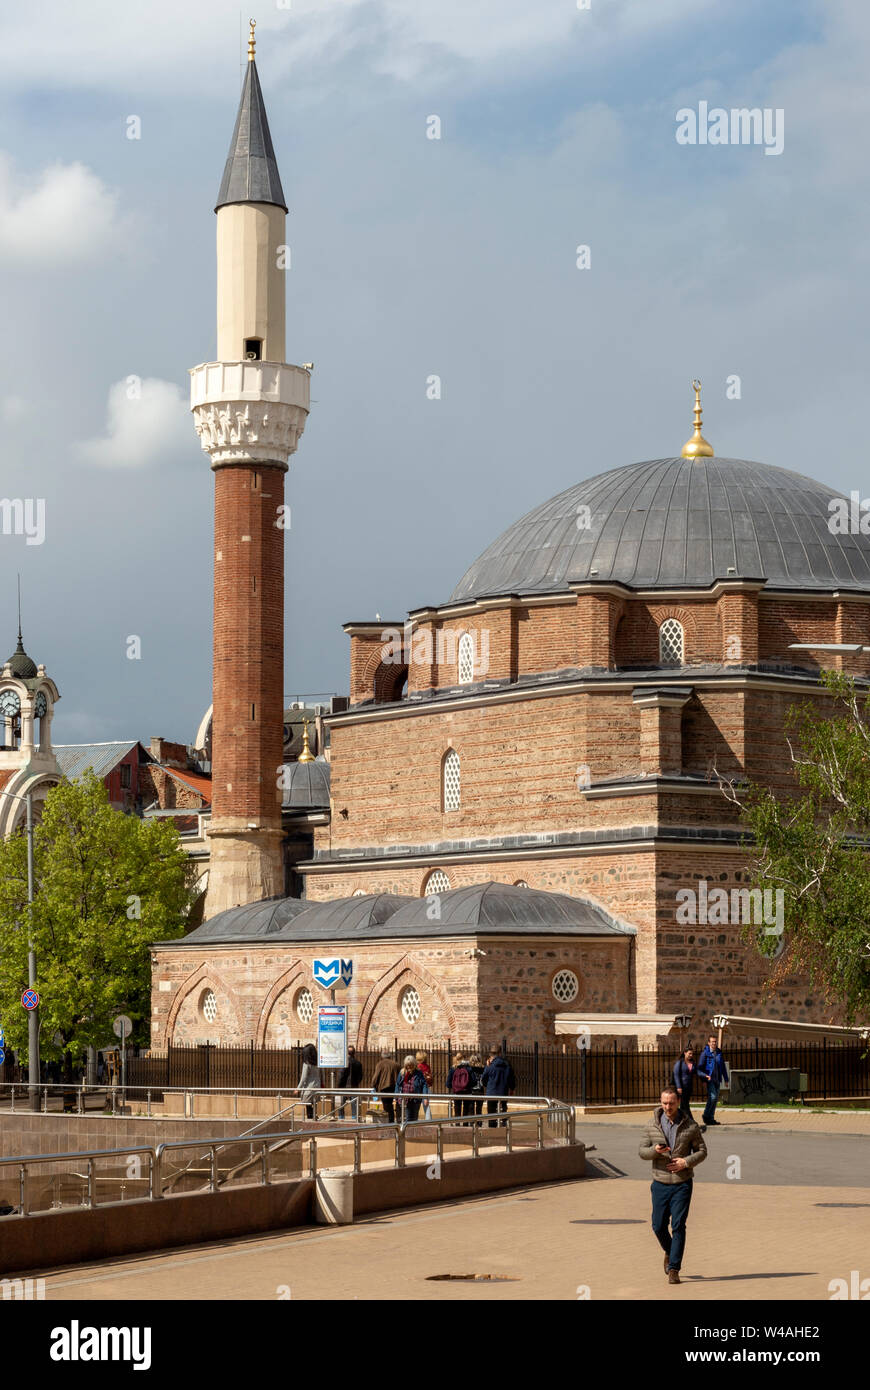 Banya Bashi vecchia architettura 16 secolo moschea Sofia Bulgaria, Europa orientale, Balcani, UE Foto Stock